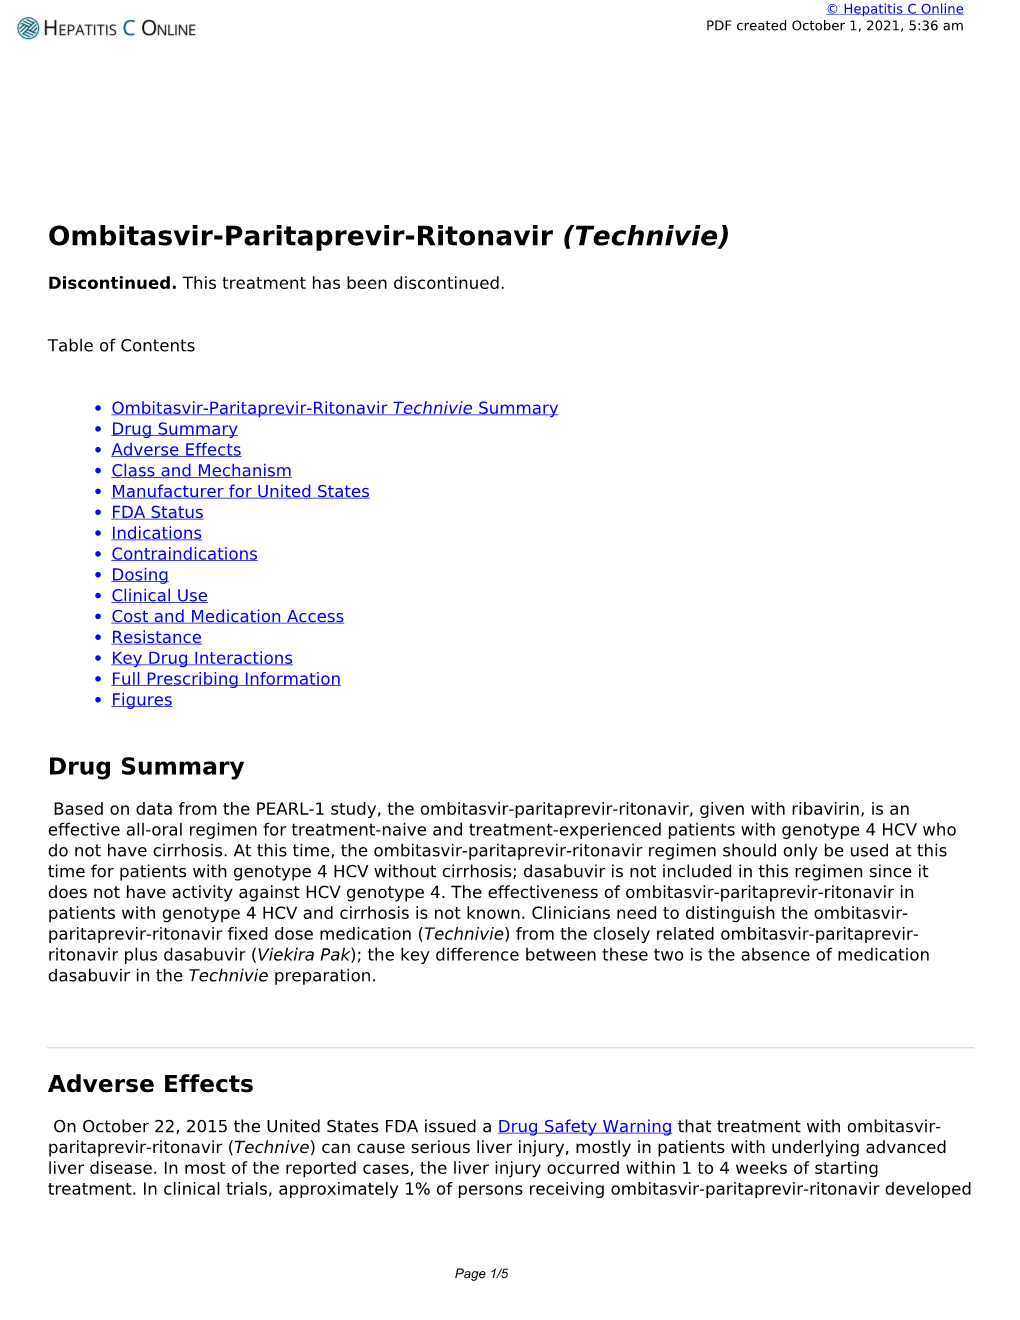 Ombitasvir-Paritaprevir-Ritonavir (Technivie)